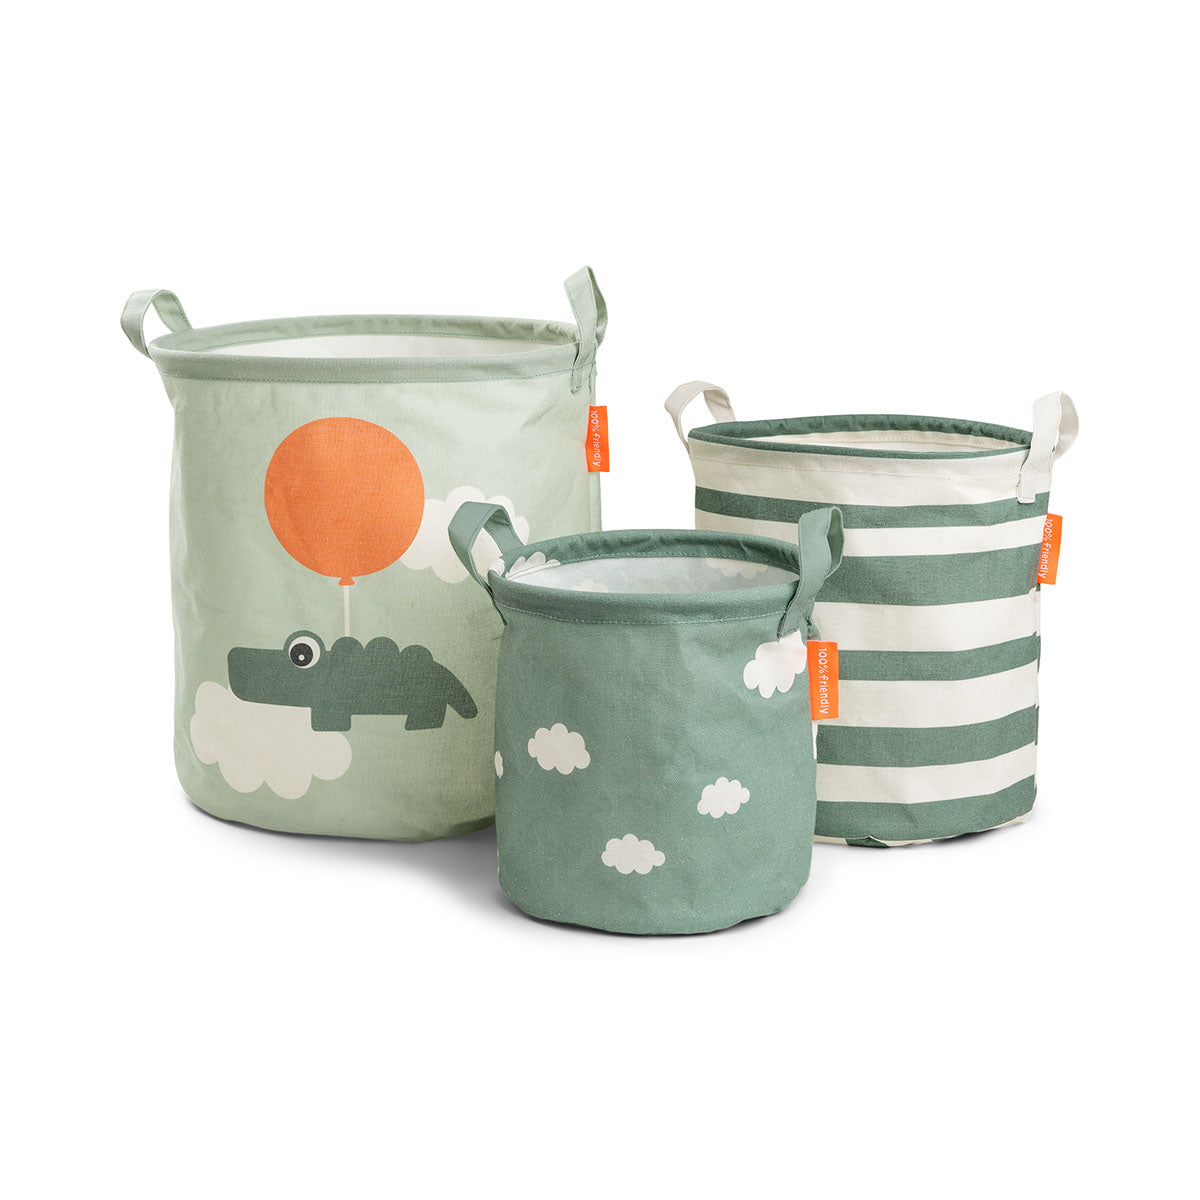 Storage basket set 3 pcs - Happy clouds - Green